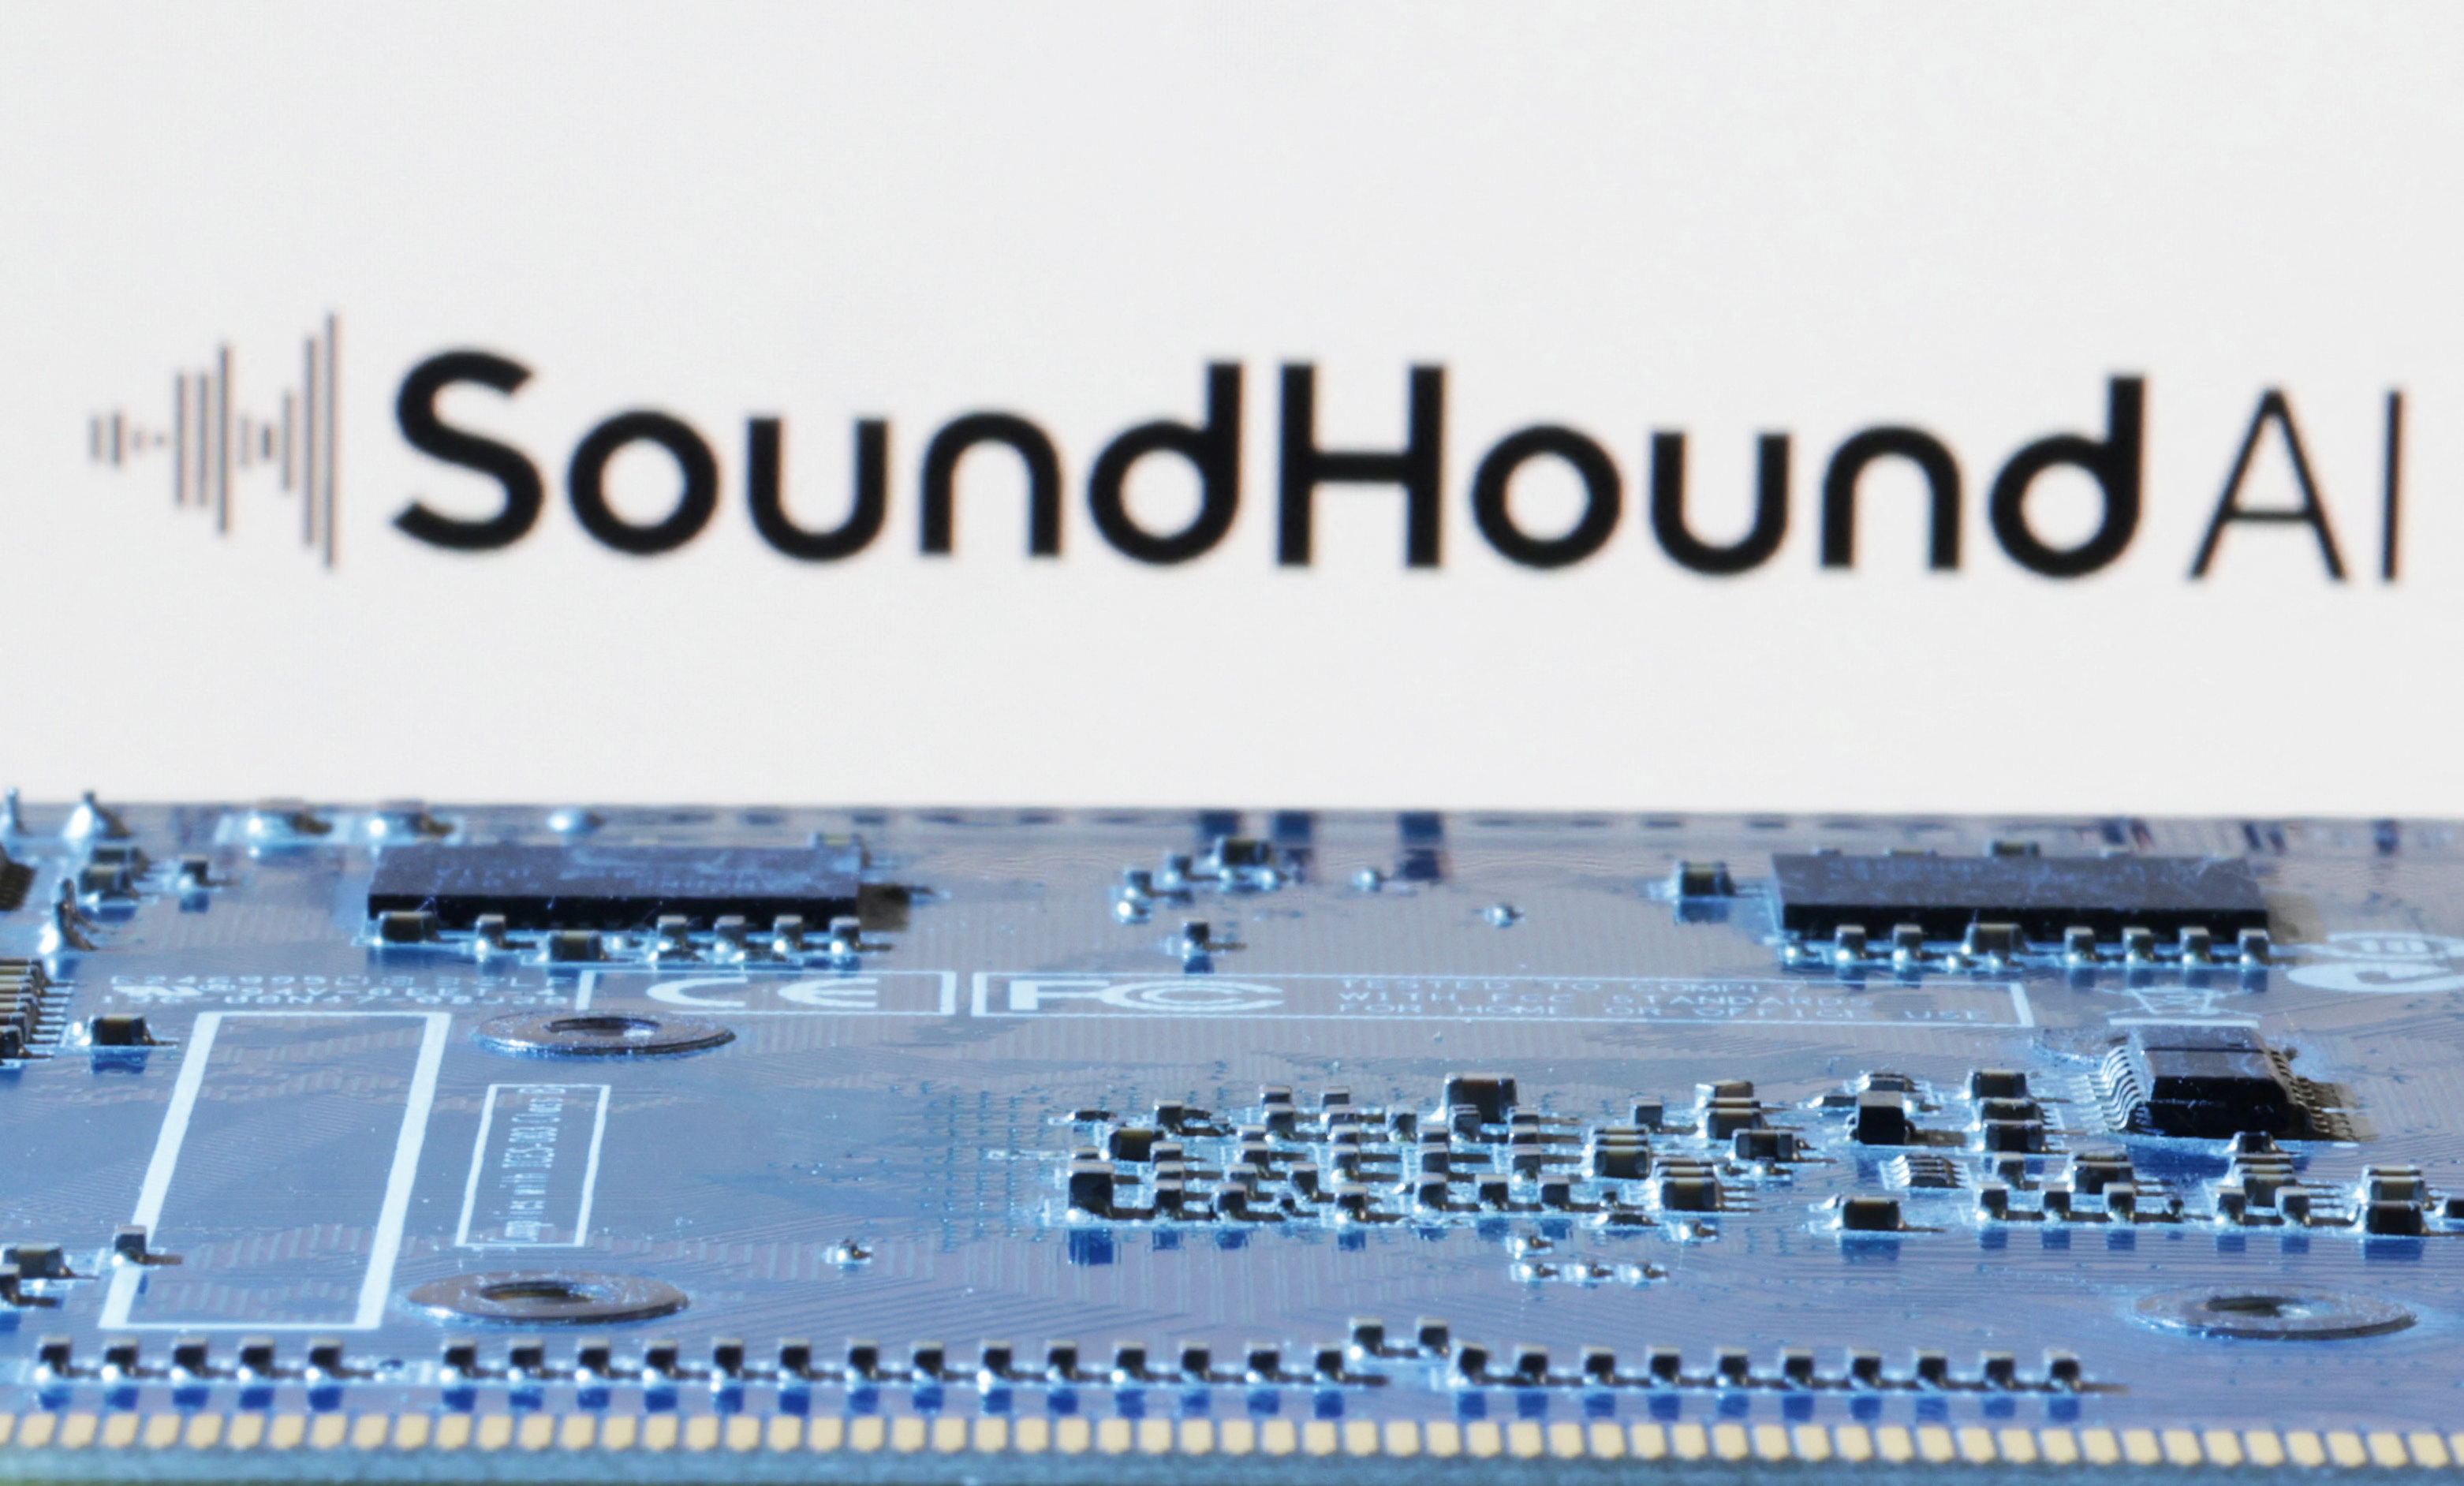 Illustration shows SoundHound AI logo